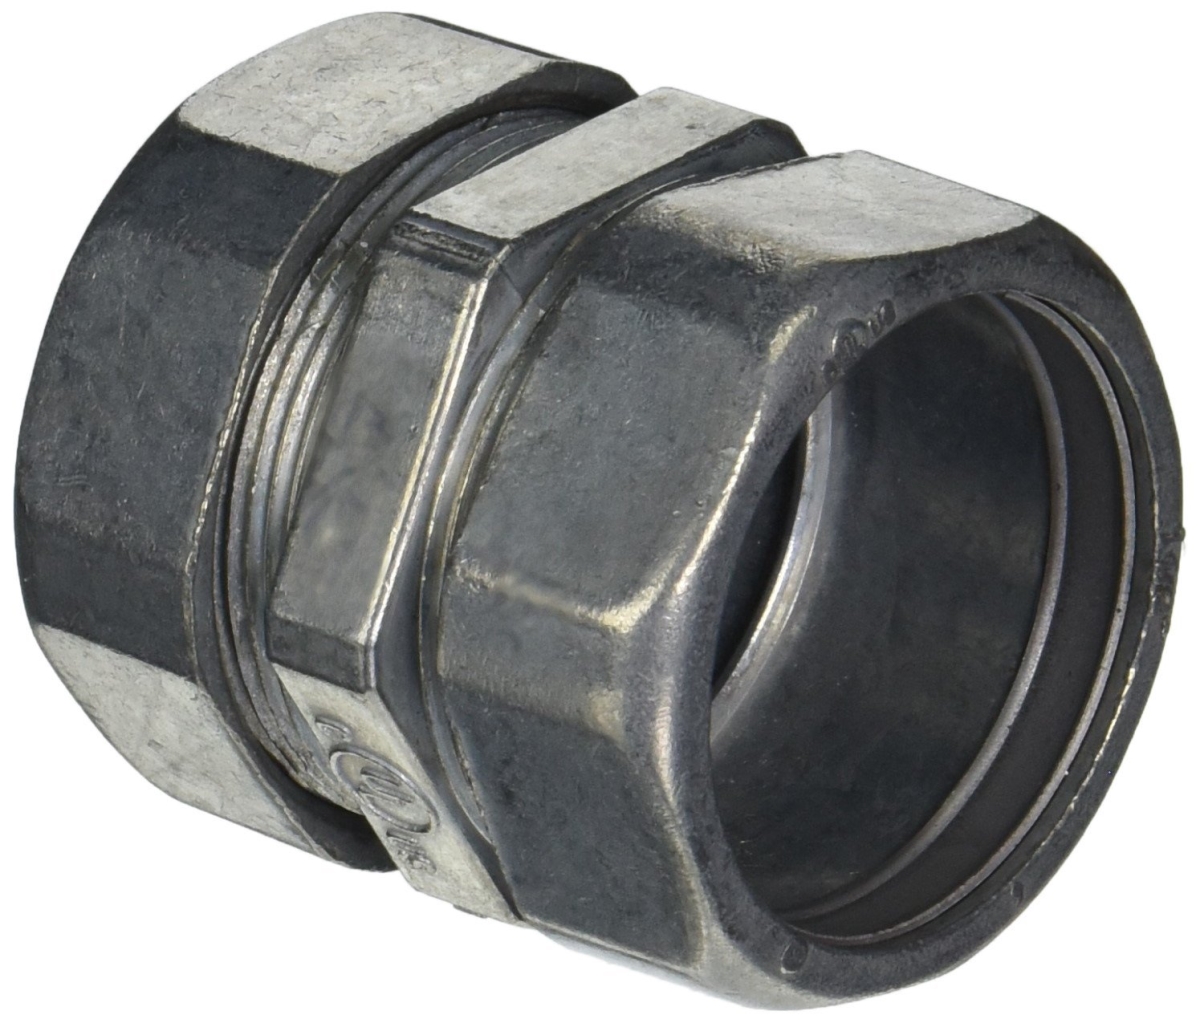 Halex Adalet 02215 1.5 In. Electrical Metallic Tubing Compression Coupling